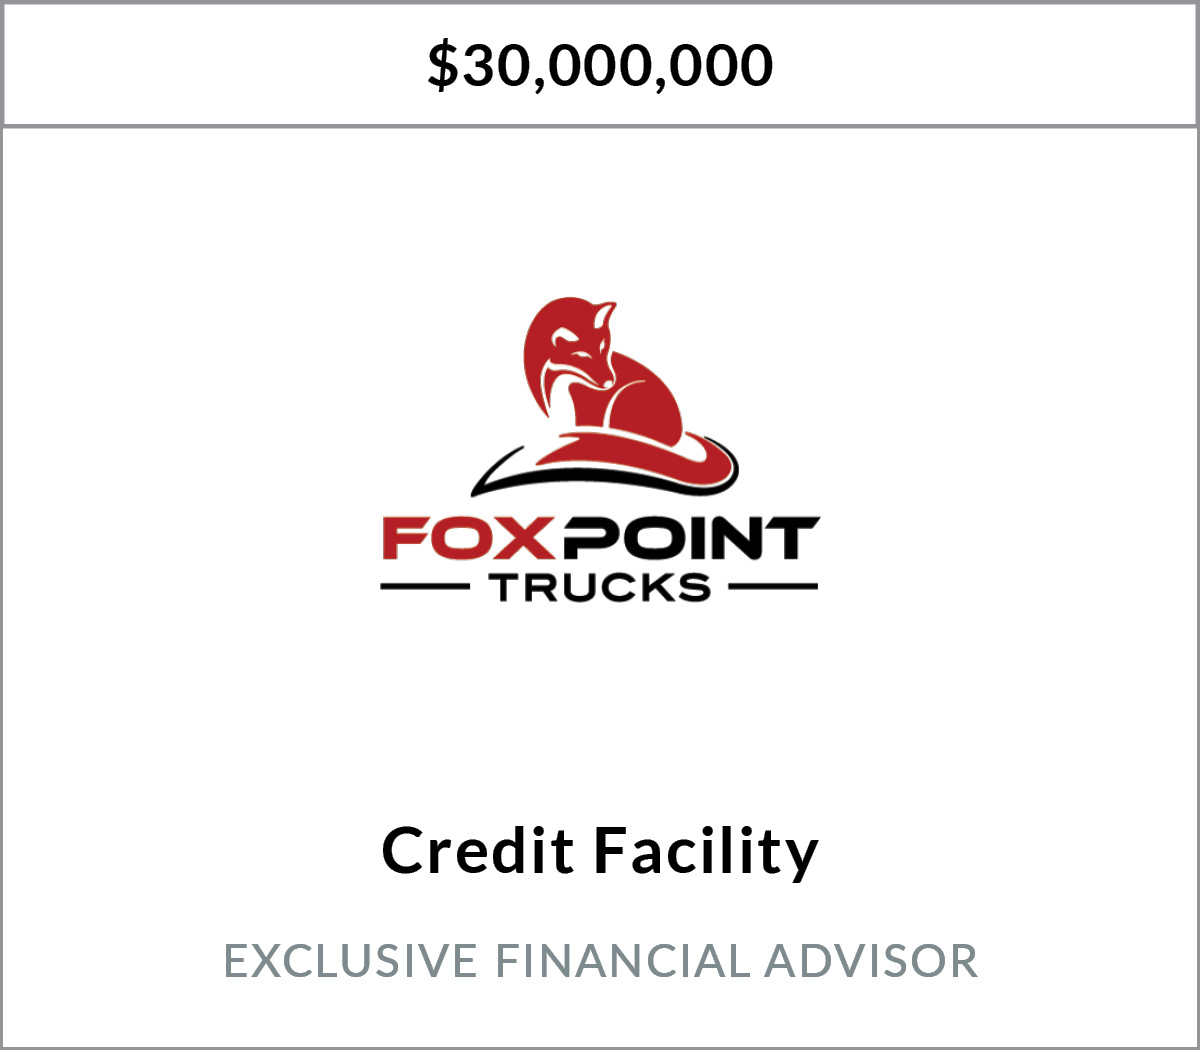 Bryant Park Capital Arranges $30 Million Senior Secured Credit Facility for FoxPoint Trucks, LLC